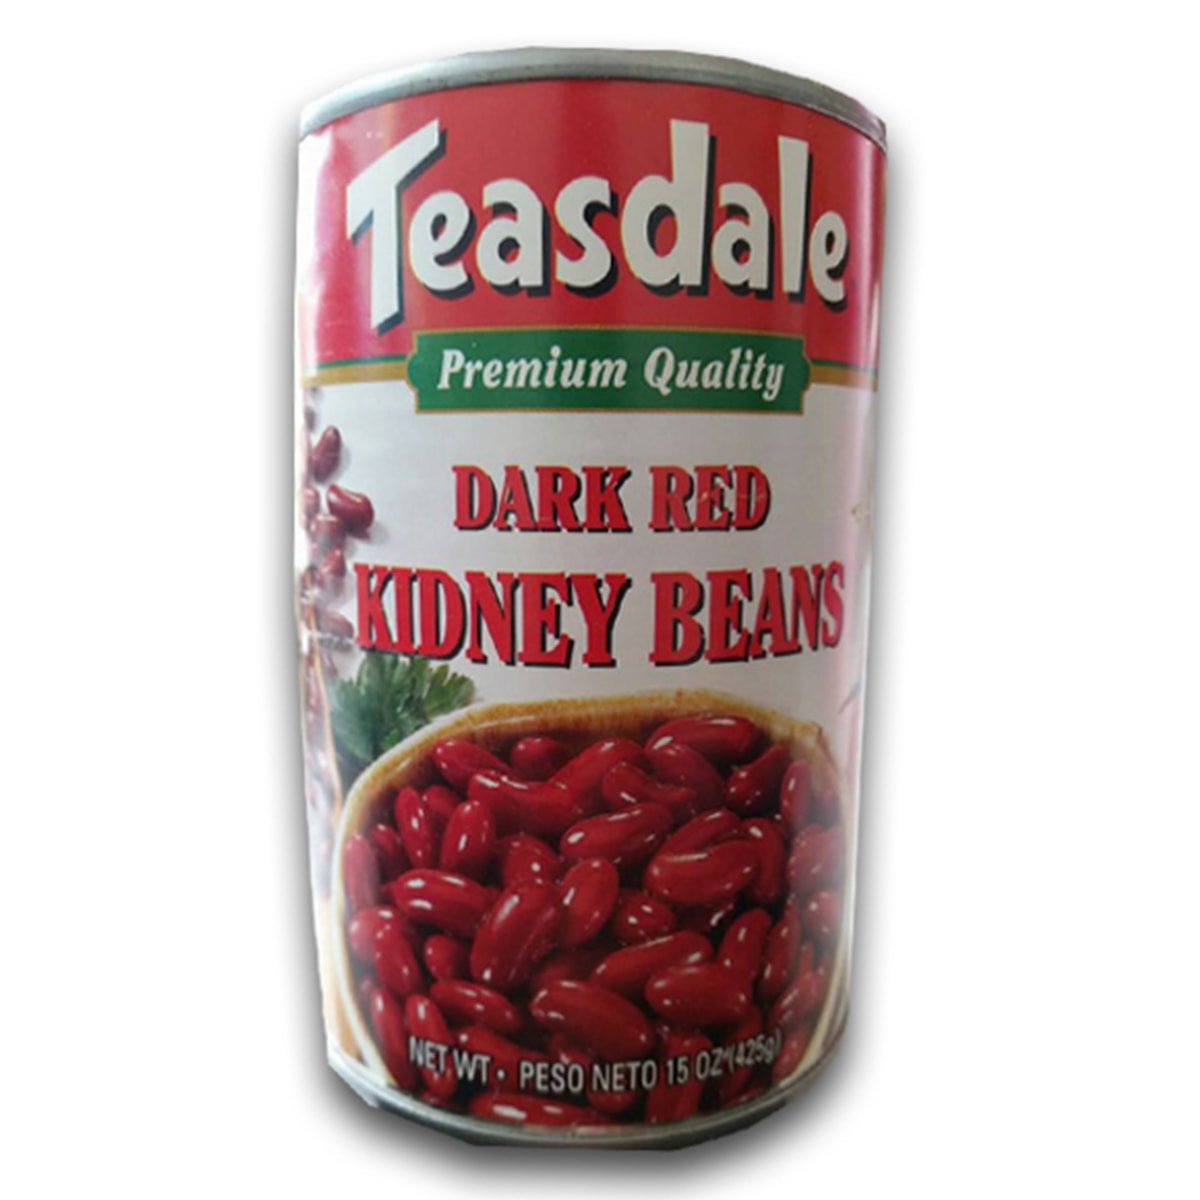 Dark Red Kidney Beans (Premium Quality) - 425 gm